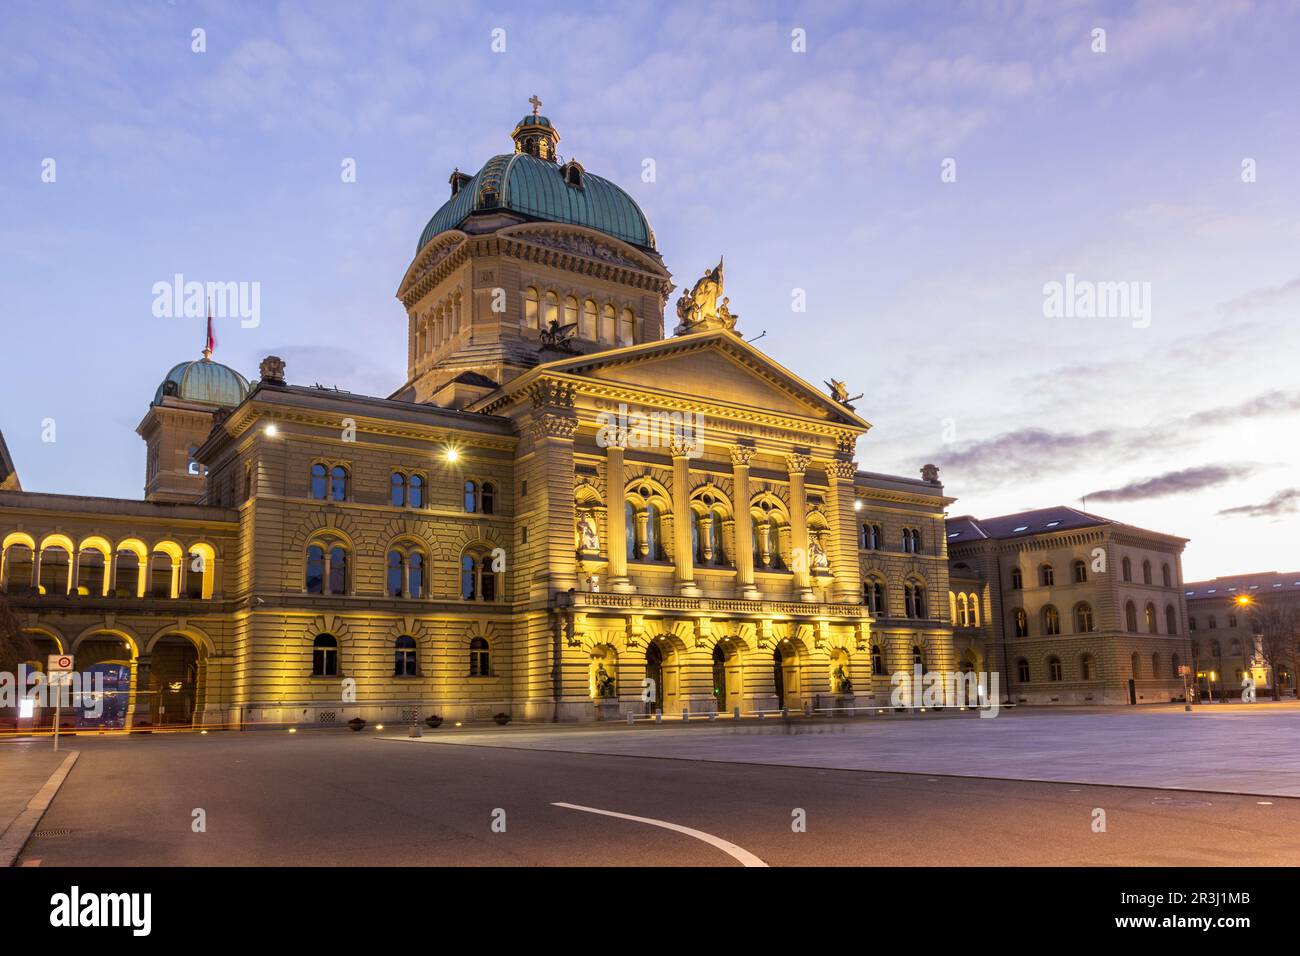 Bern, Switzerland - December 26. 2020: The Swiss parliament building Bundeshaus in twilight, Bern, Switzerland Stock Photo